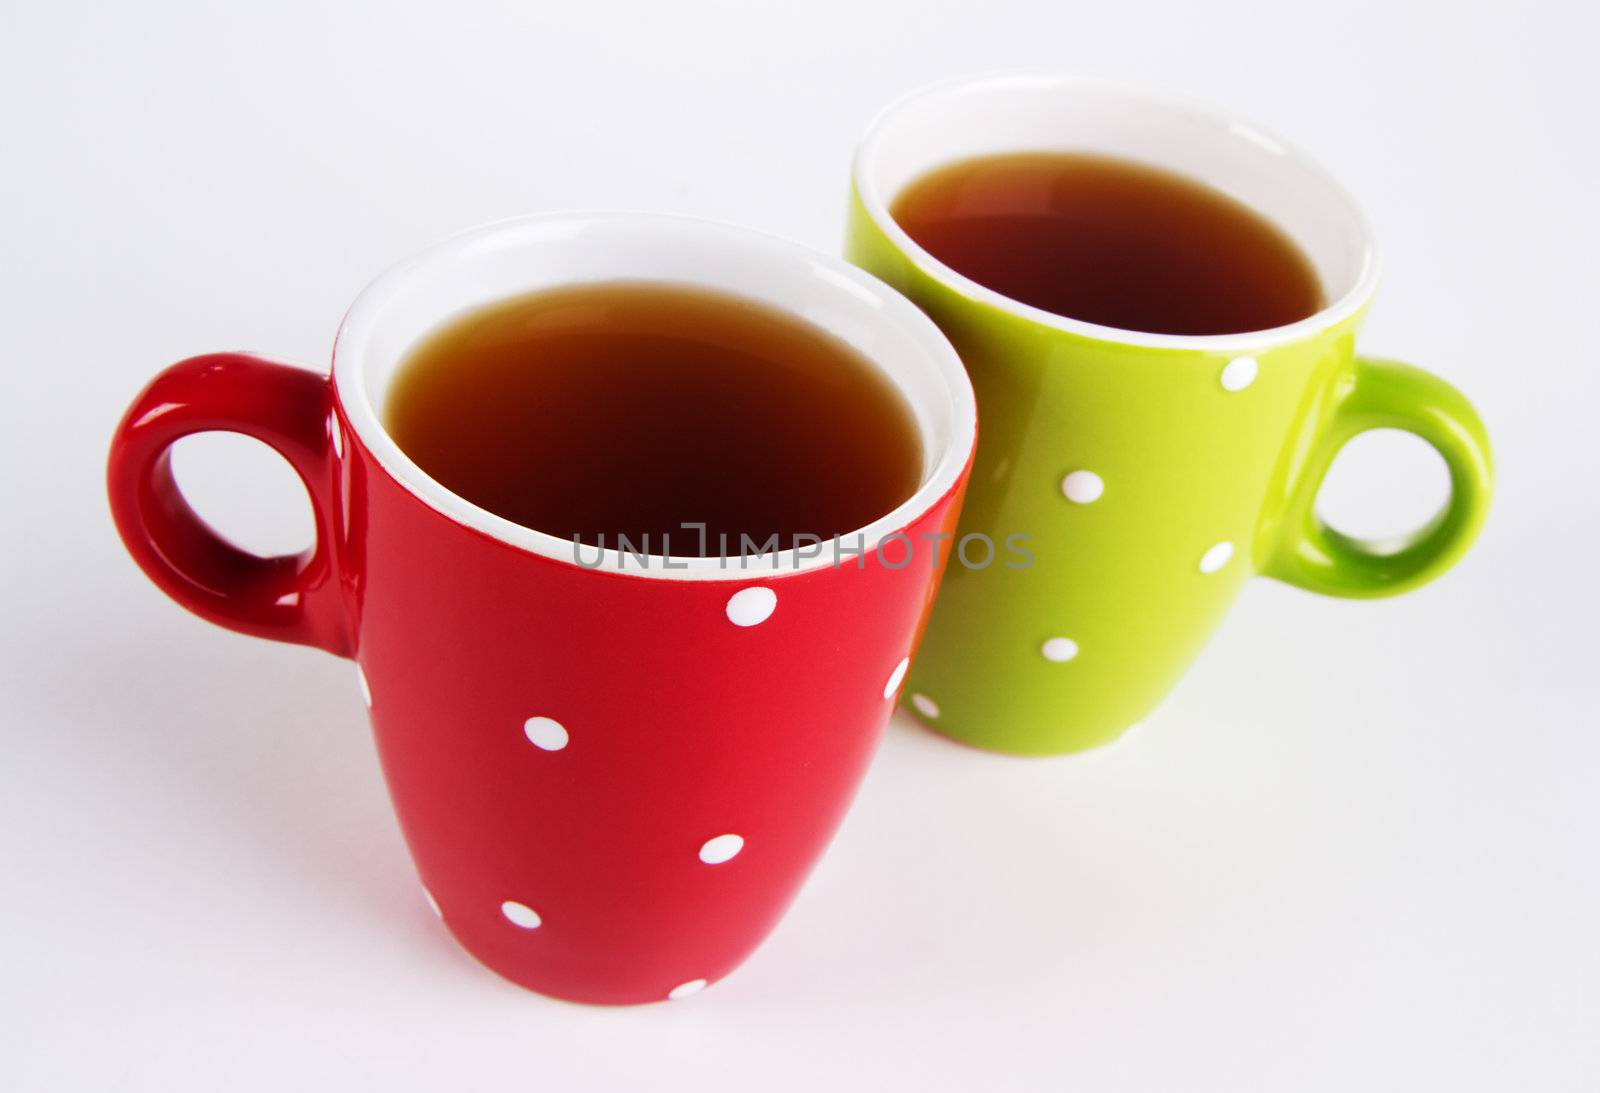 Cups of tea by Gdolgikh